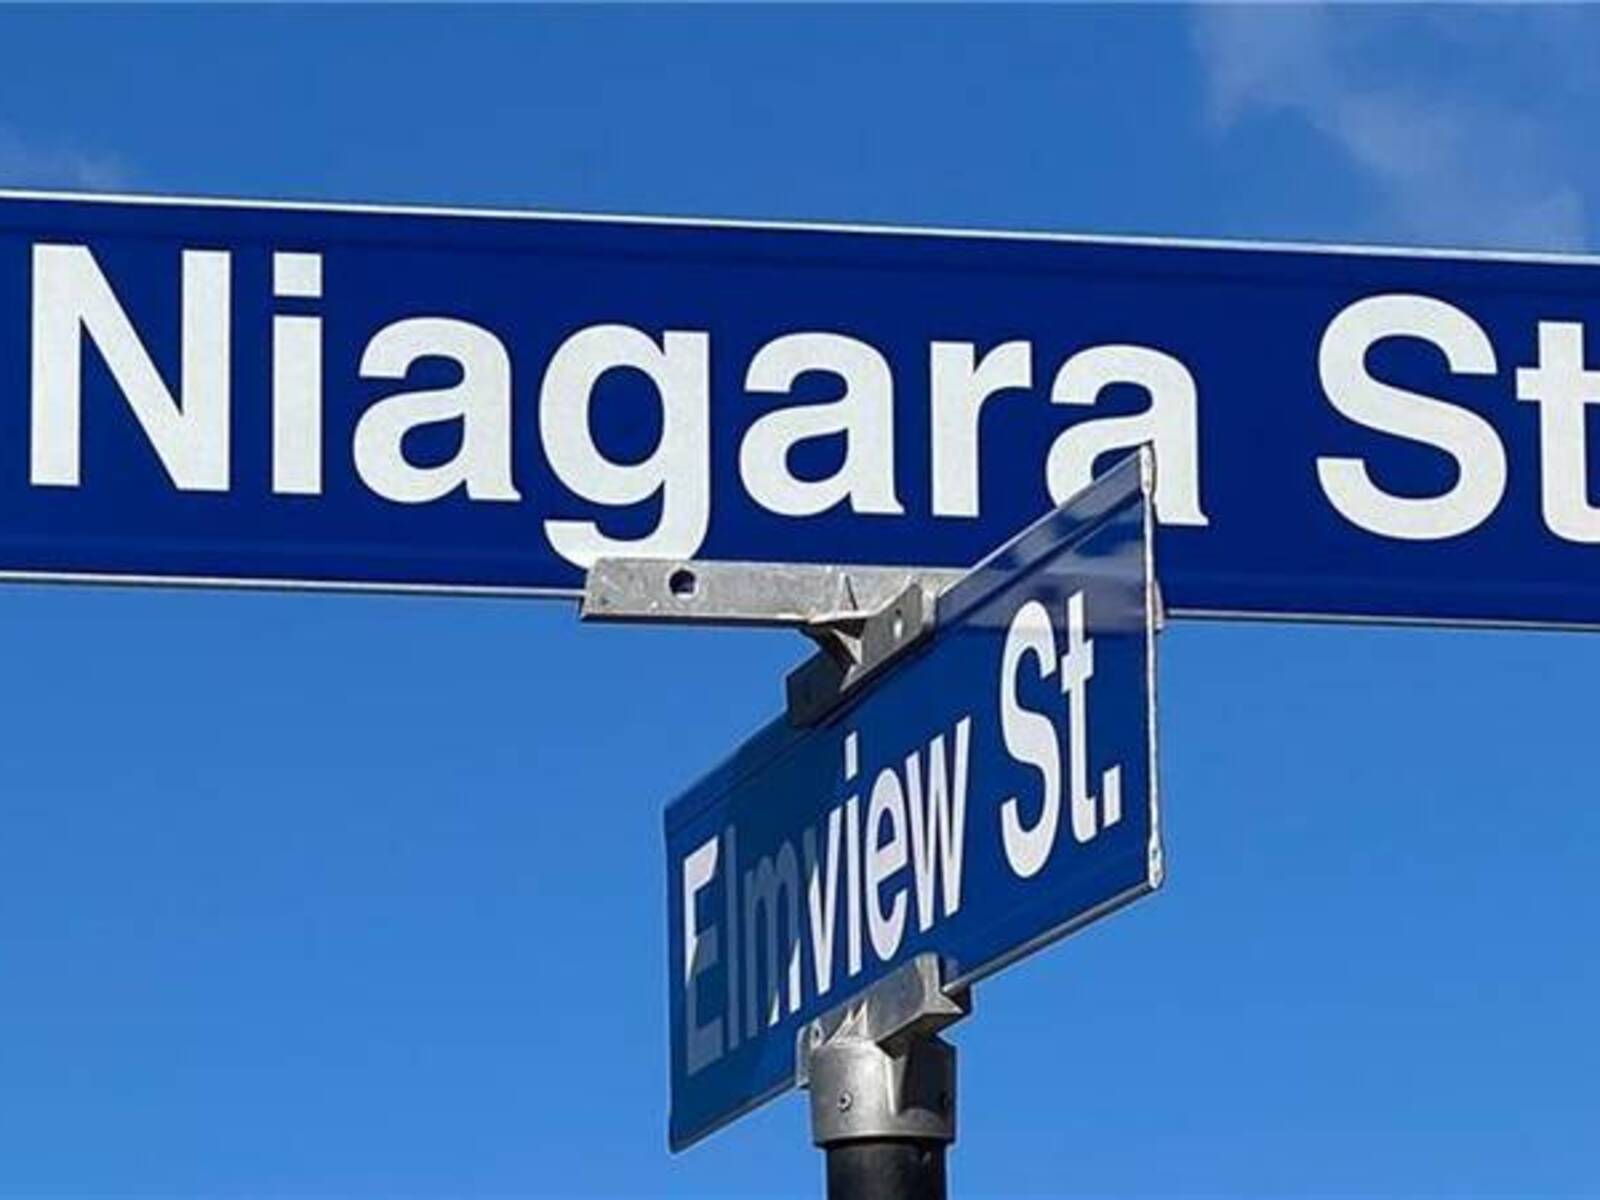 281 NIAGARA Street, Welland, Ontario L3C 1K5